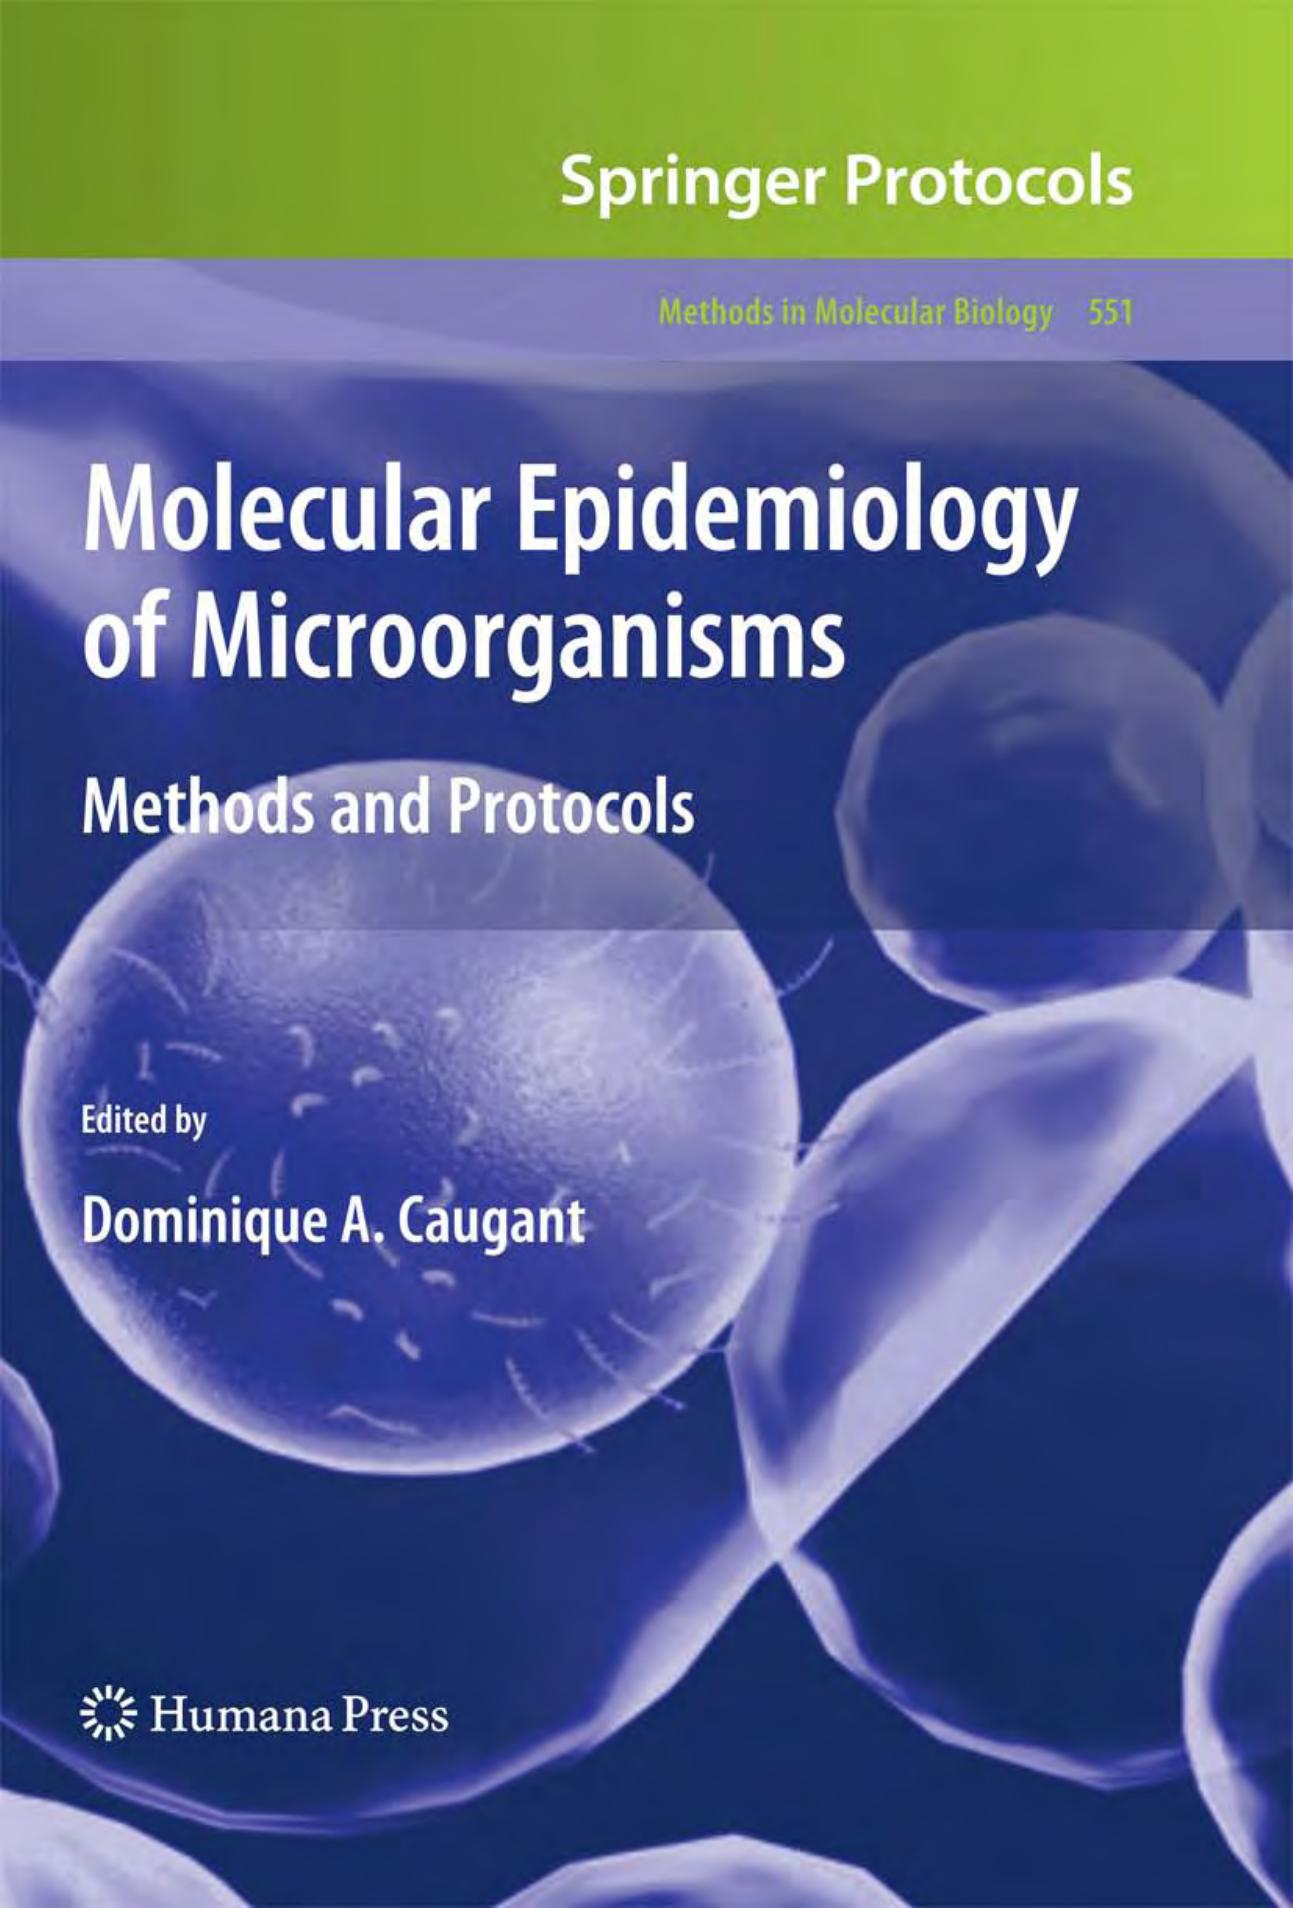 Molecular Epidemiology of Microorganisms 2009